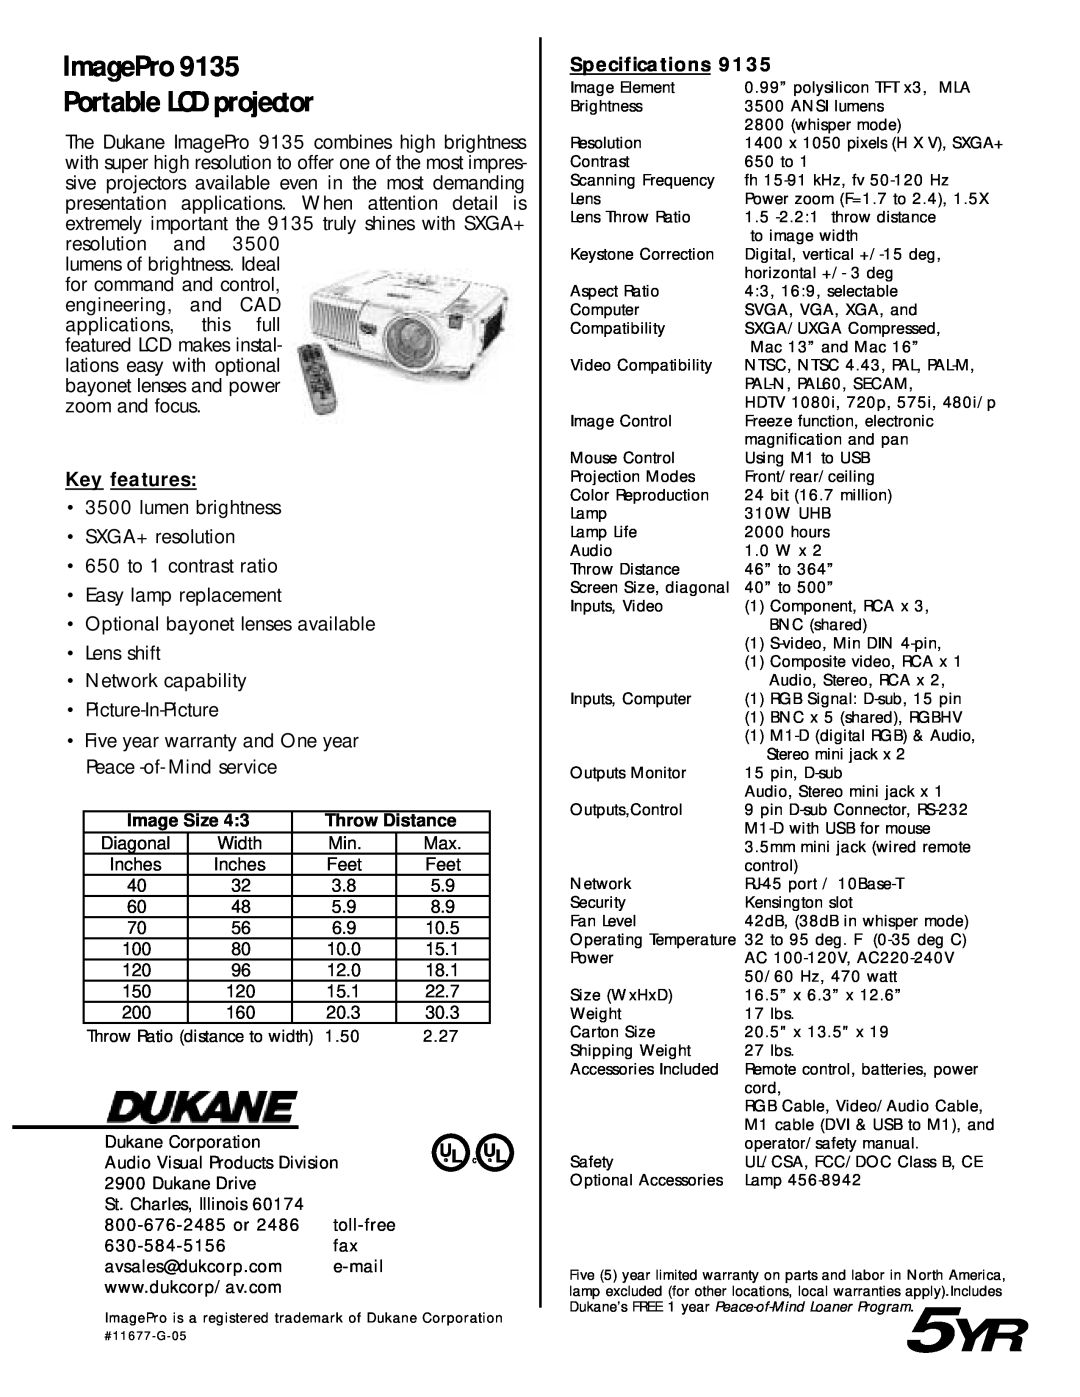 Dukane 9135 ImagePro Portable LCD projector, Key features, lumen brightness SXGA+ resolution 650 to 1 contrast ratio 